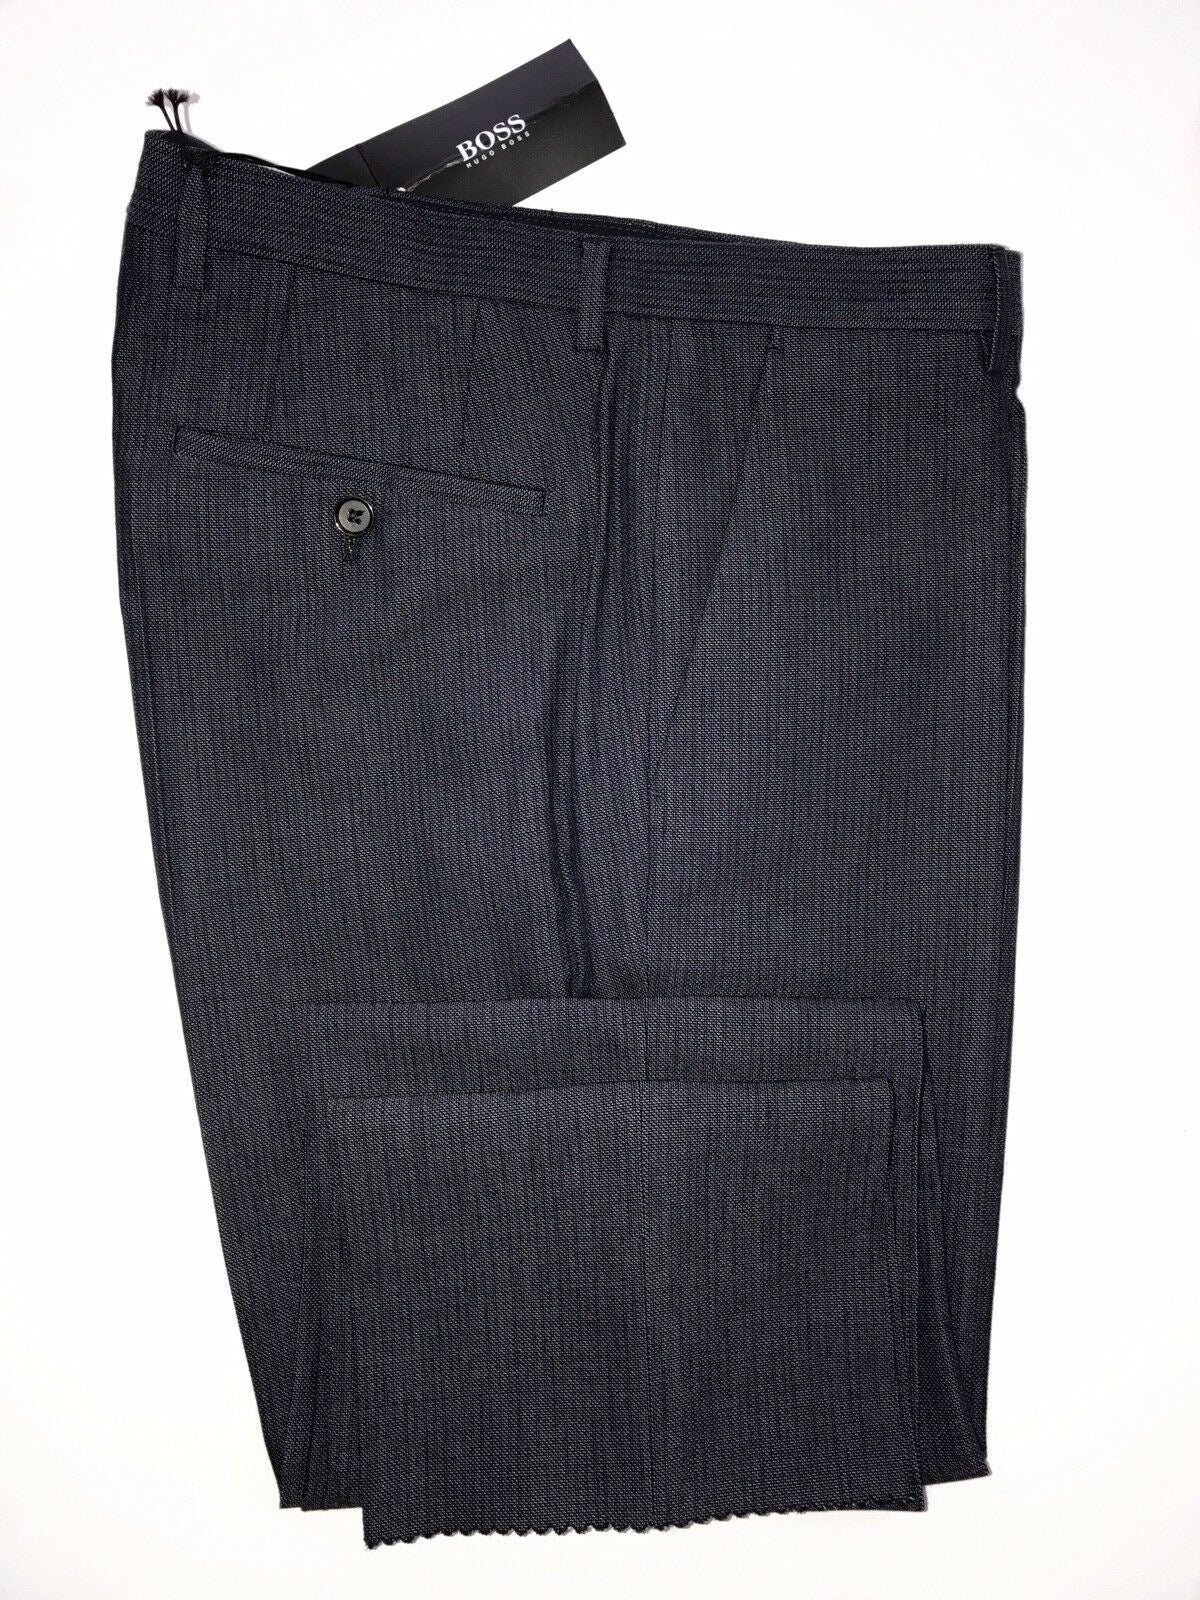 NWT $255 Boss Hugo Boss Central Mens Navy Dress Pants Size 32R US